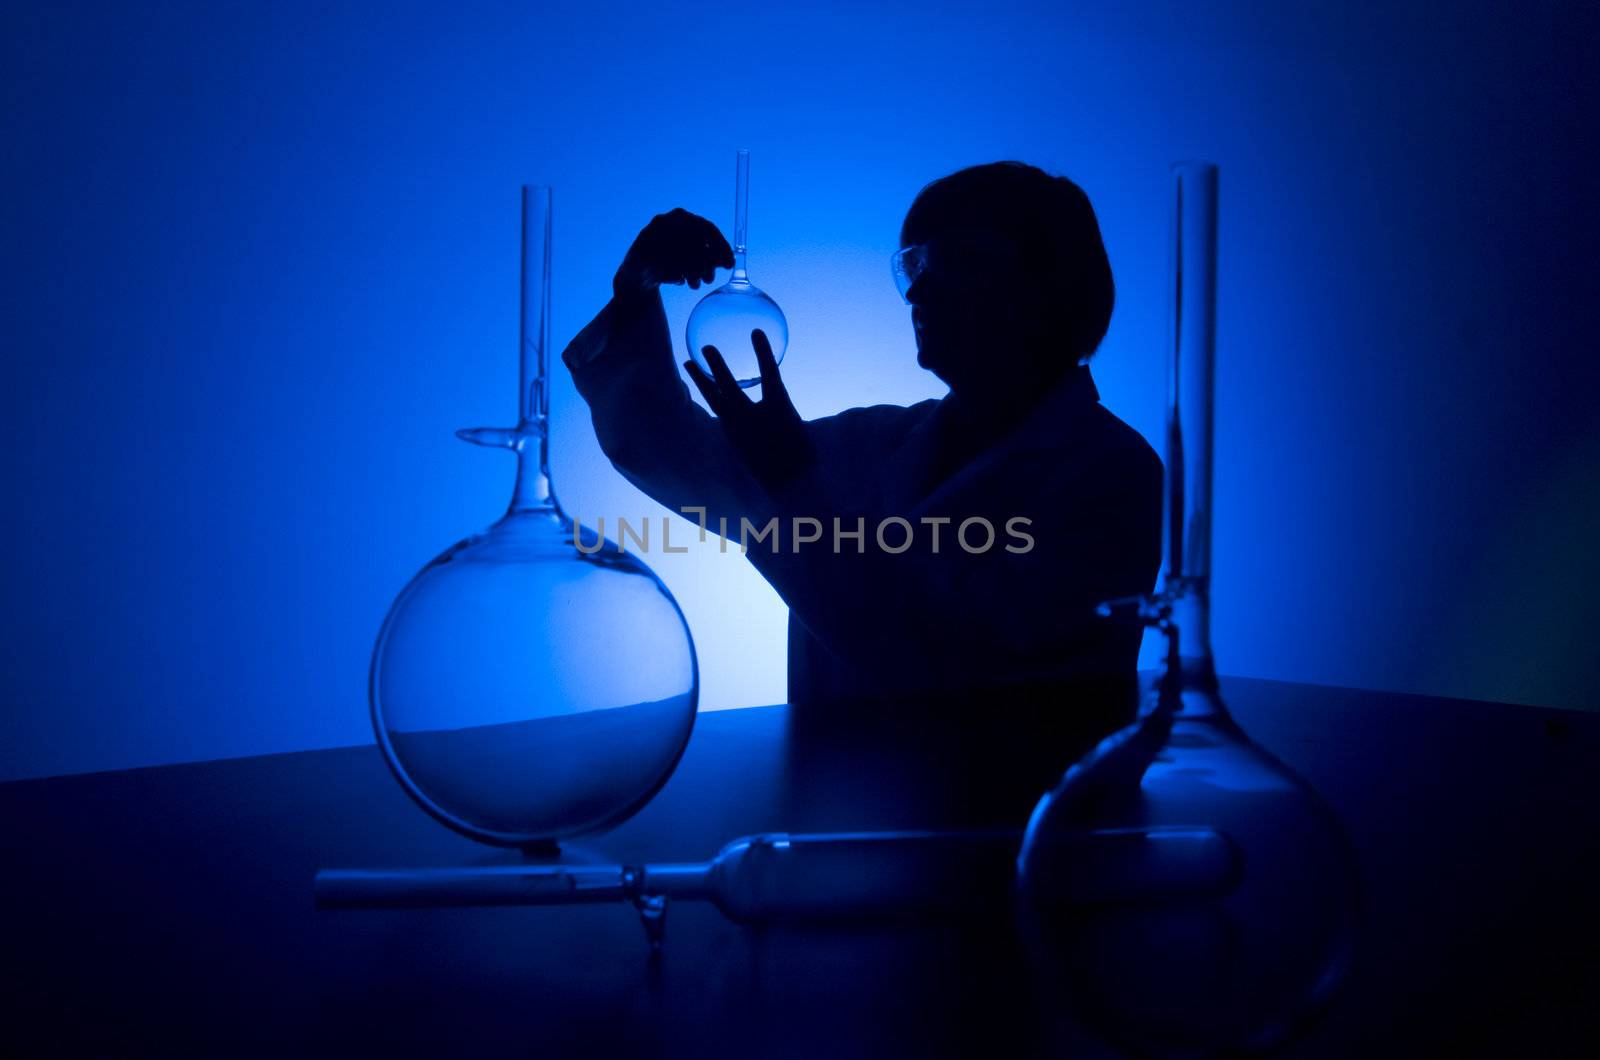 Research lab technician silhouette